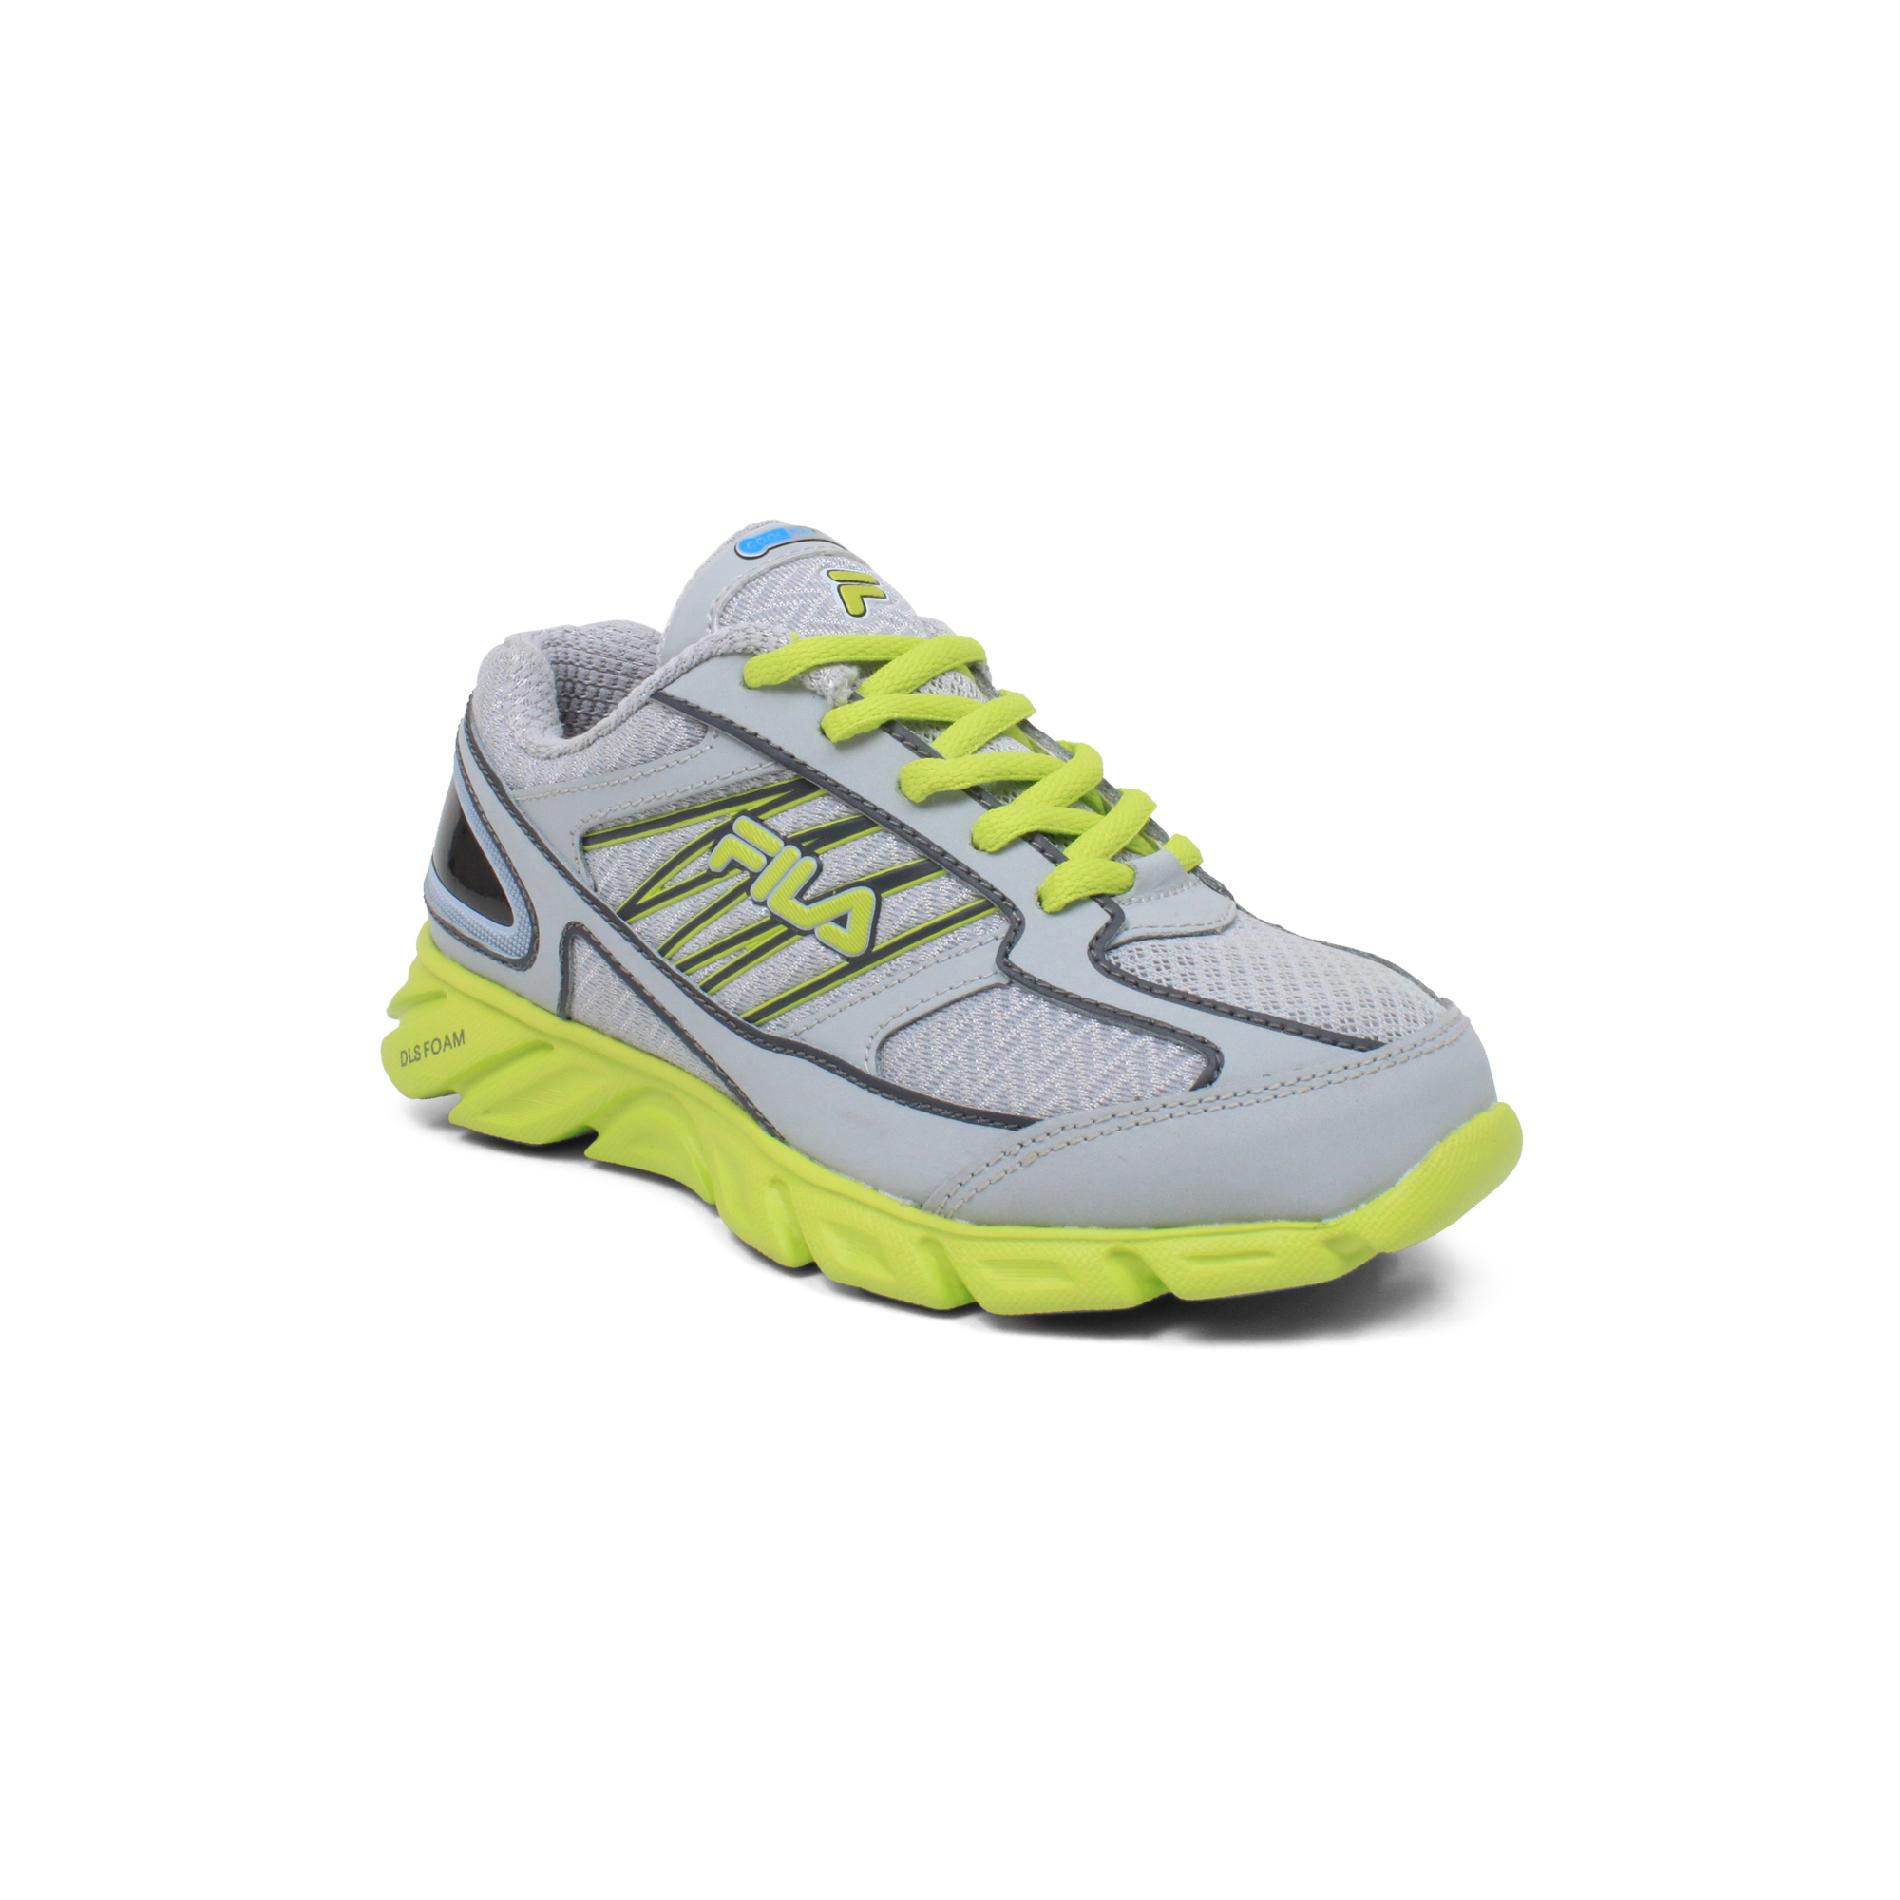 Fila Boy's Athletic Shoe Radical Lite - Silver/Gray/Lime